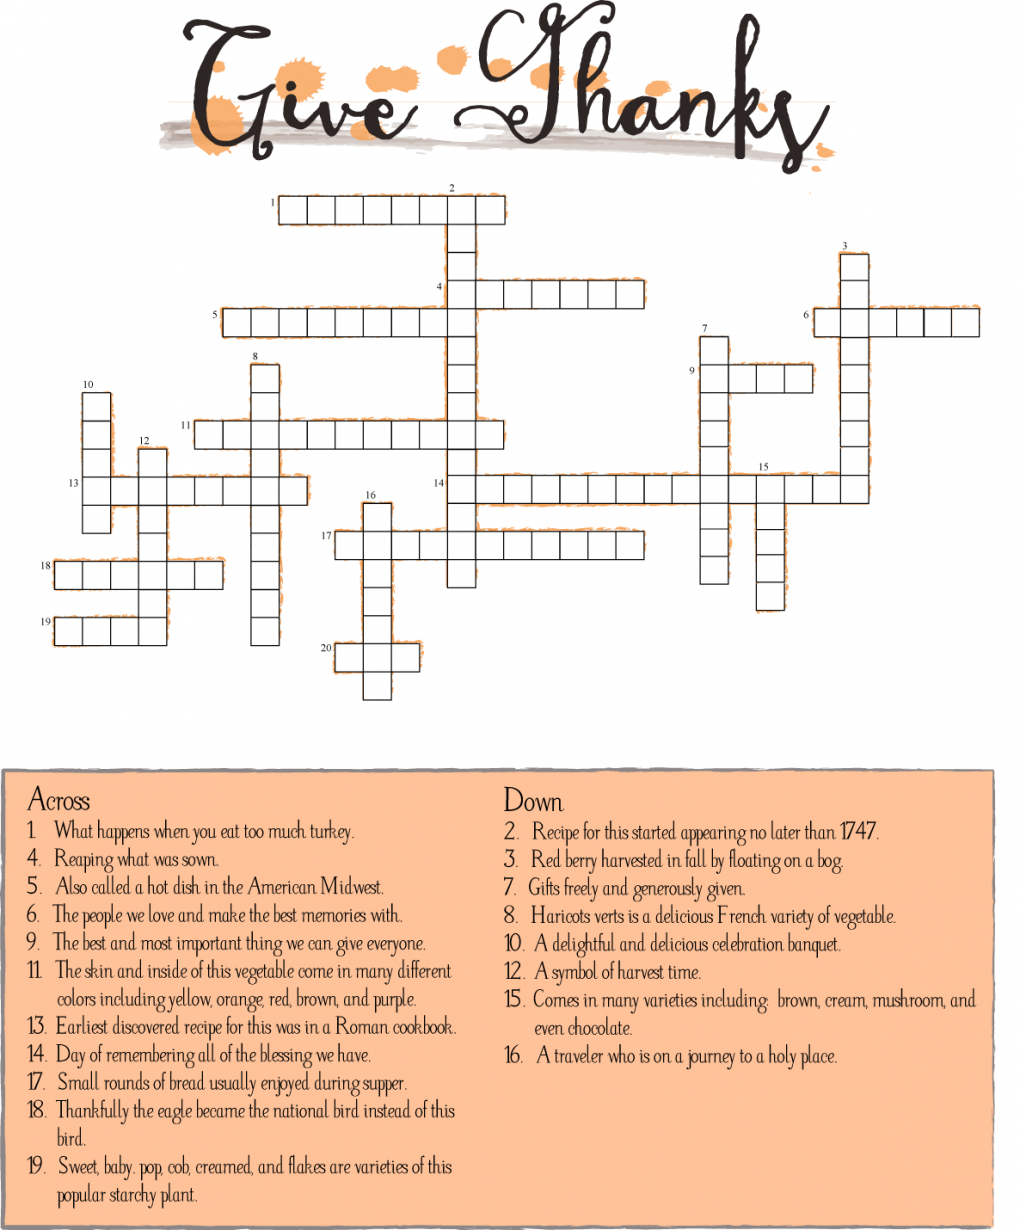 10 Superfun Thanksgiving Crossword Puzzles | Kittybabylove - Thanksgiving Crossword Puzzles Printable Free